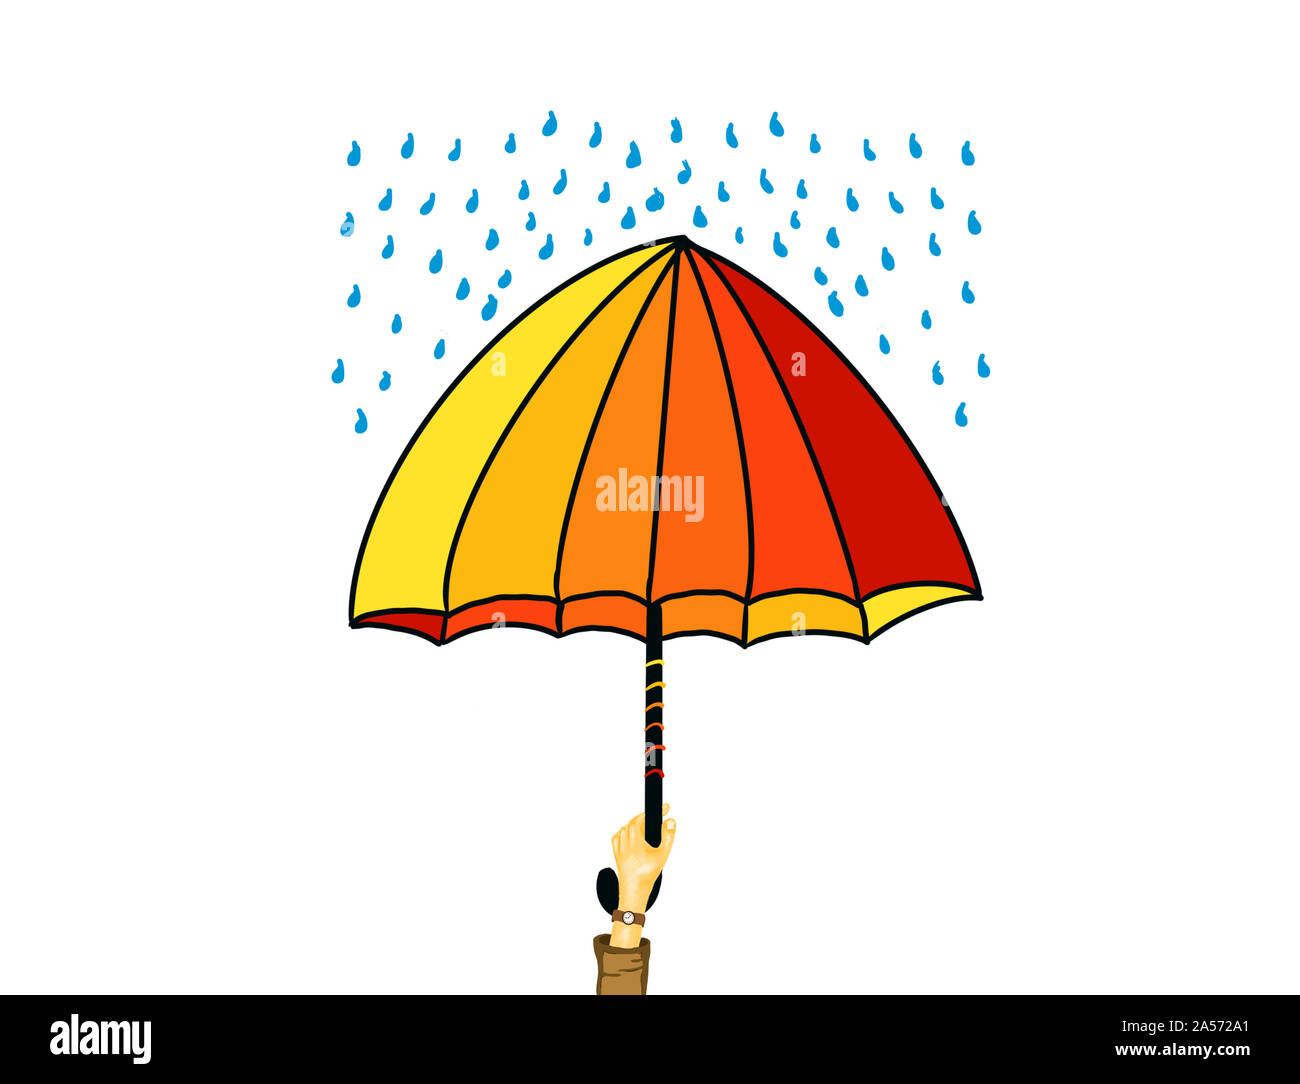 Illustration of feeling safe under umbrella in rainy weather. Stock Photo